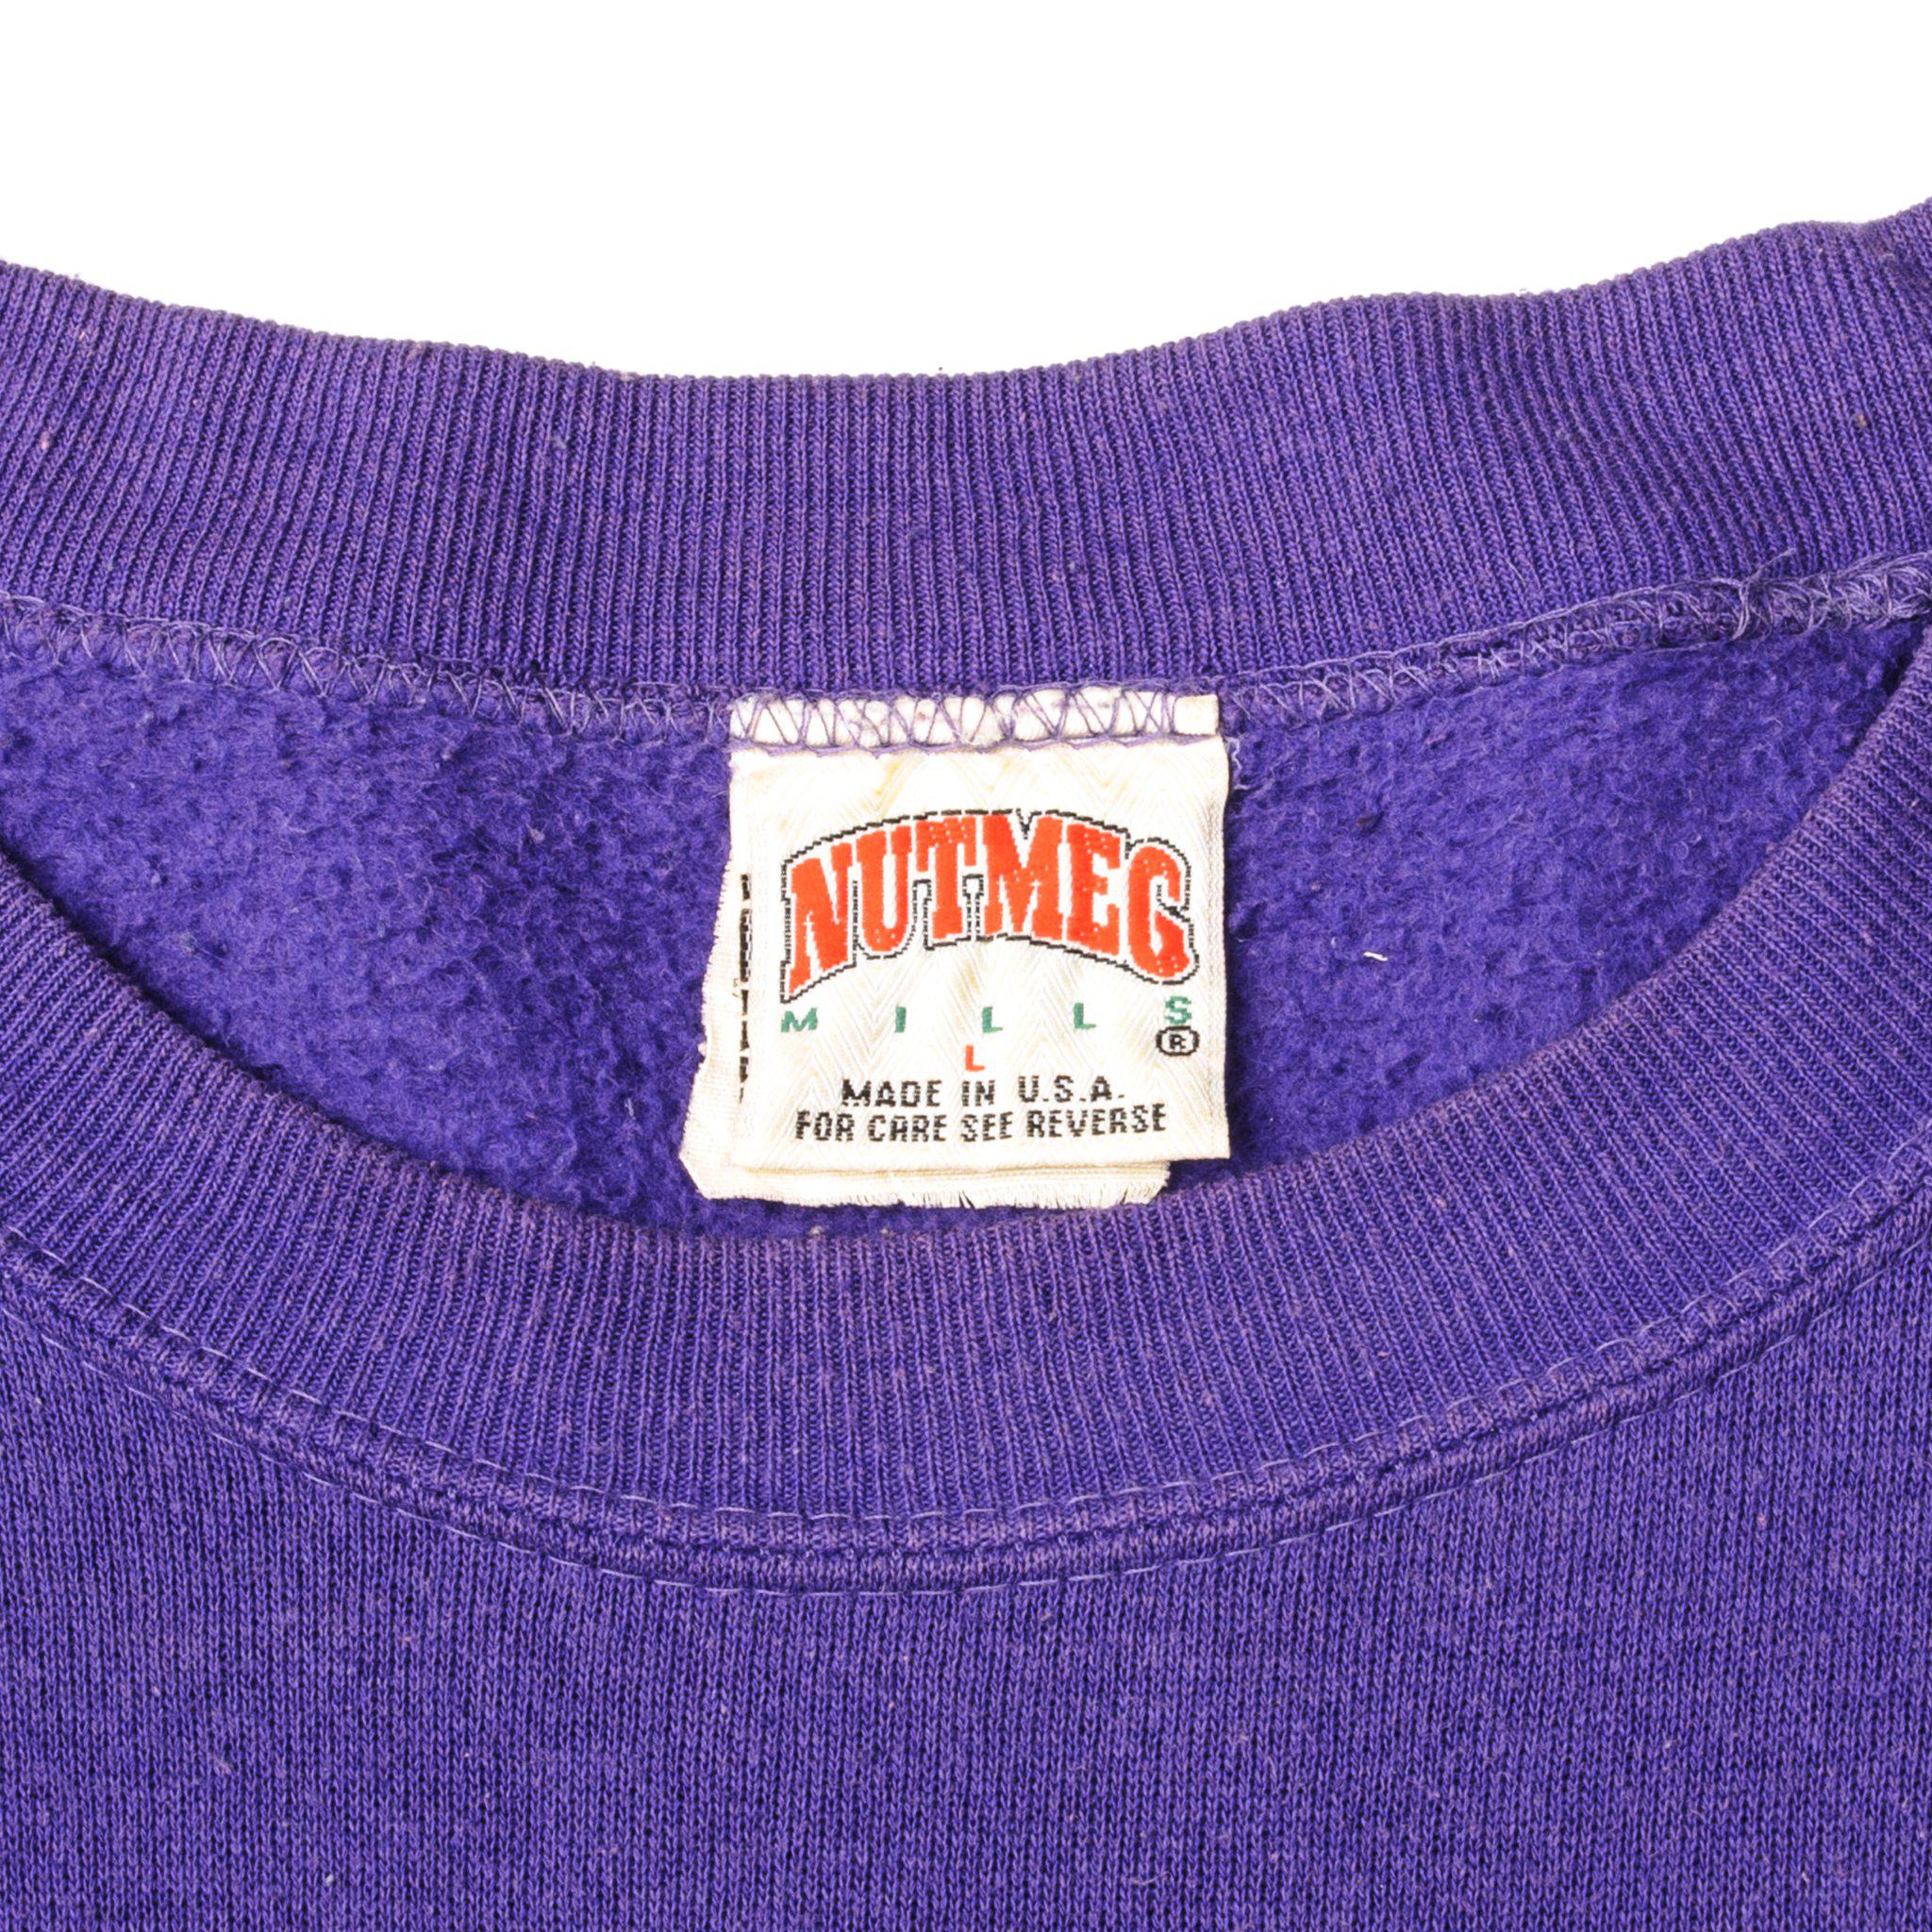 La Lakers Sweatshirt - Large– Domno Vintage